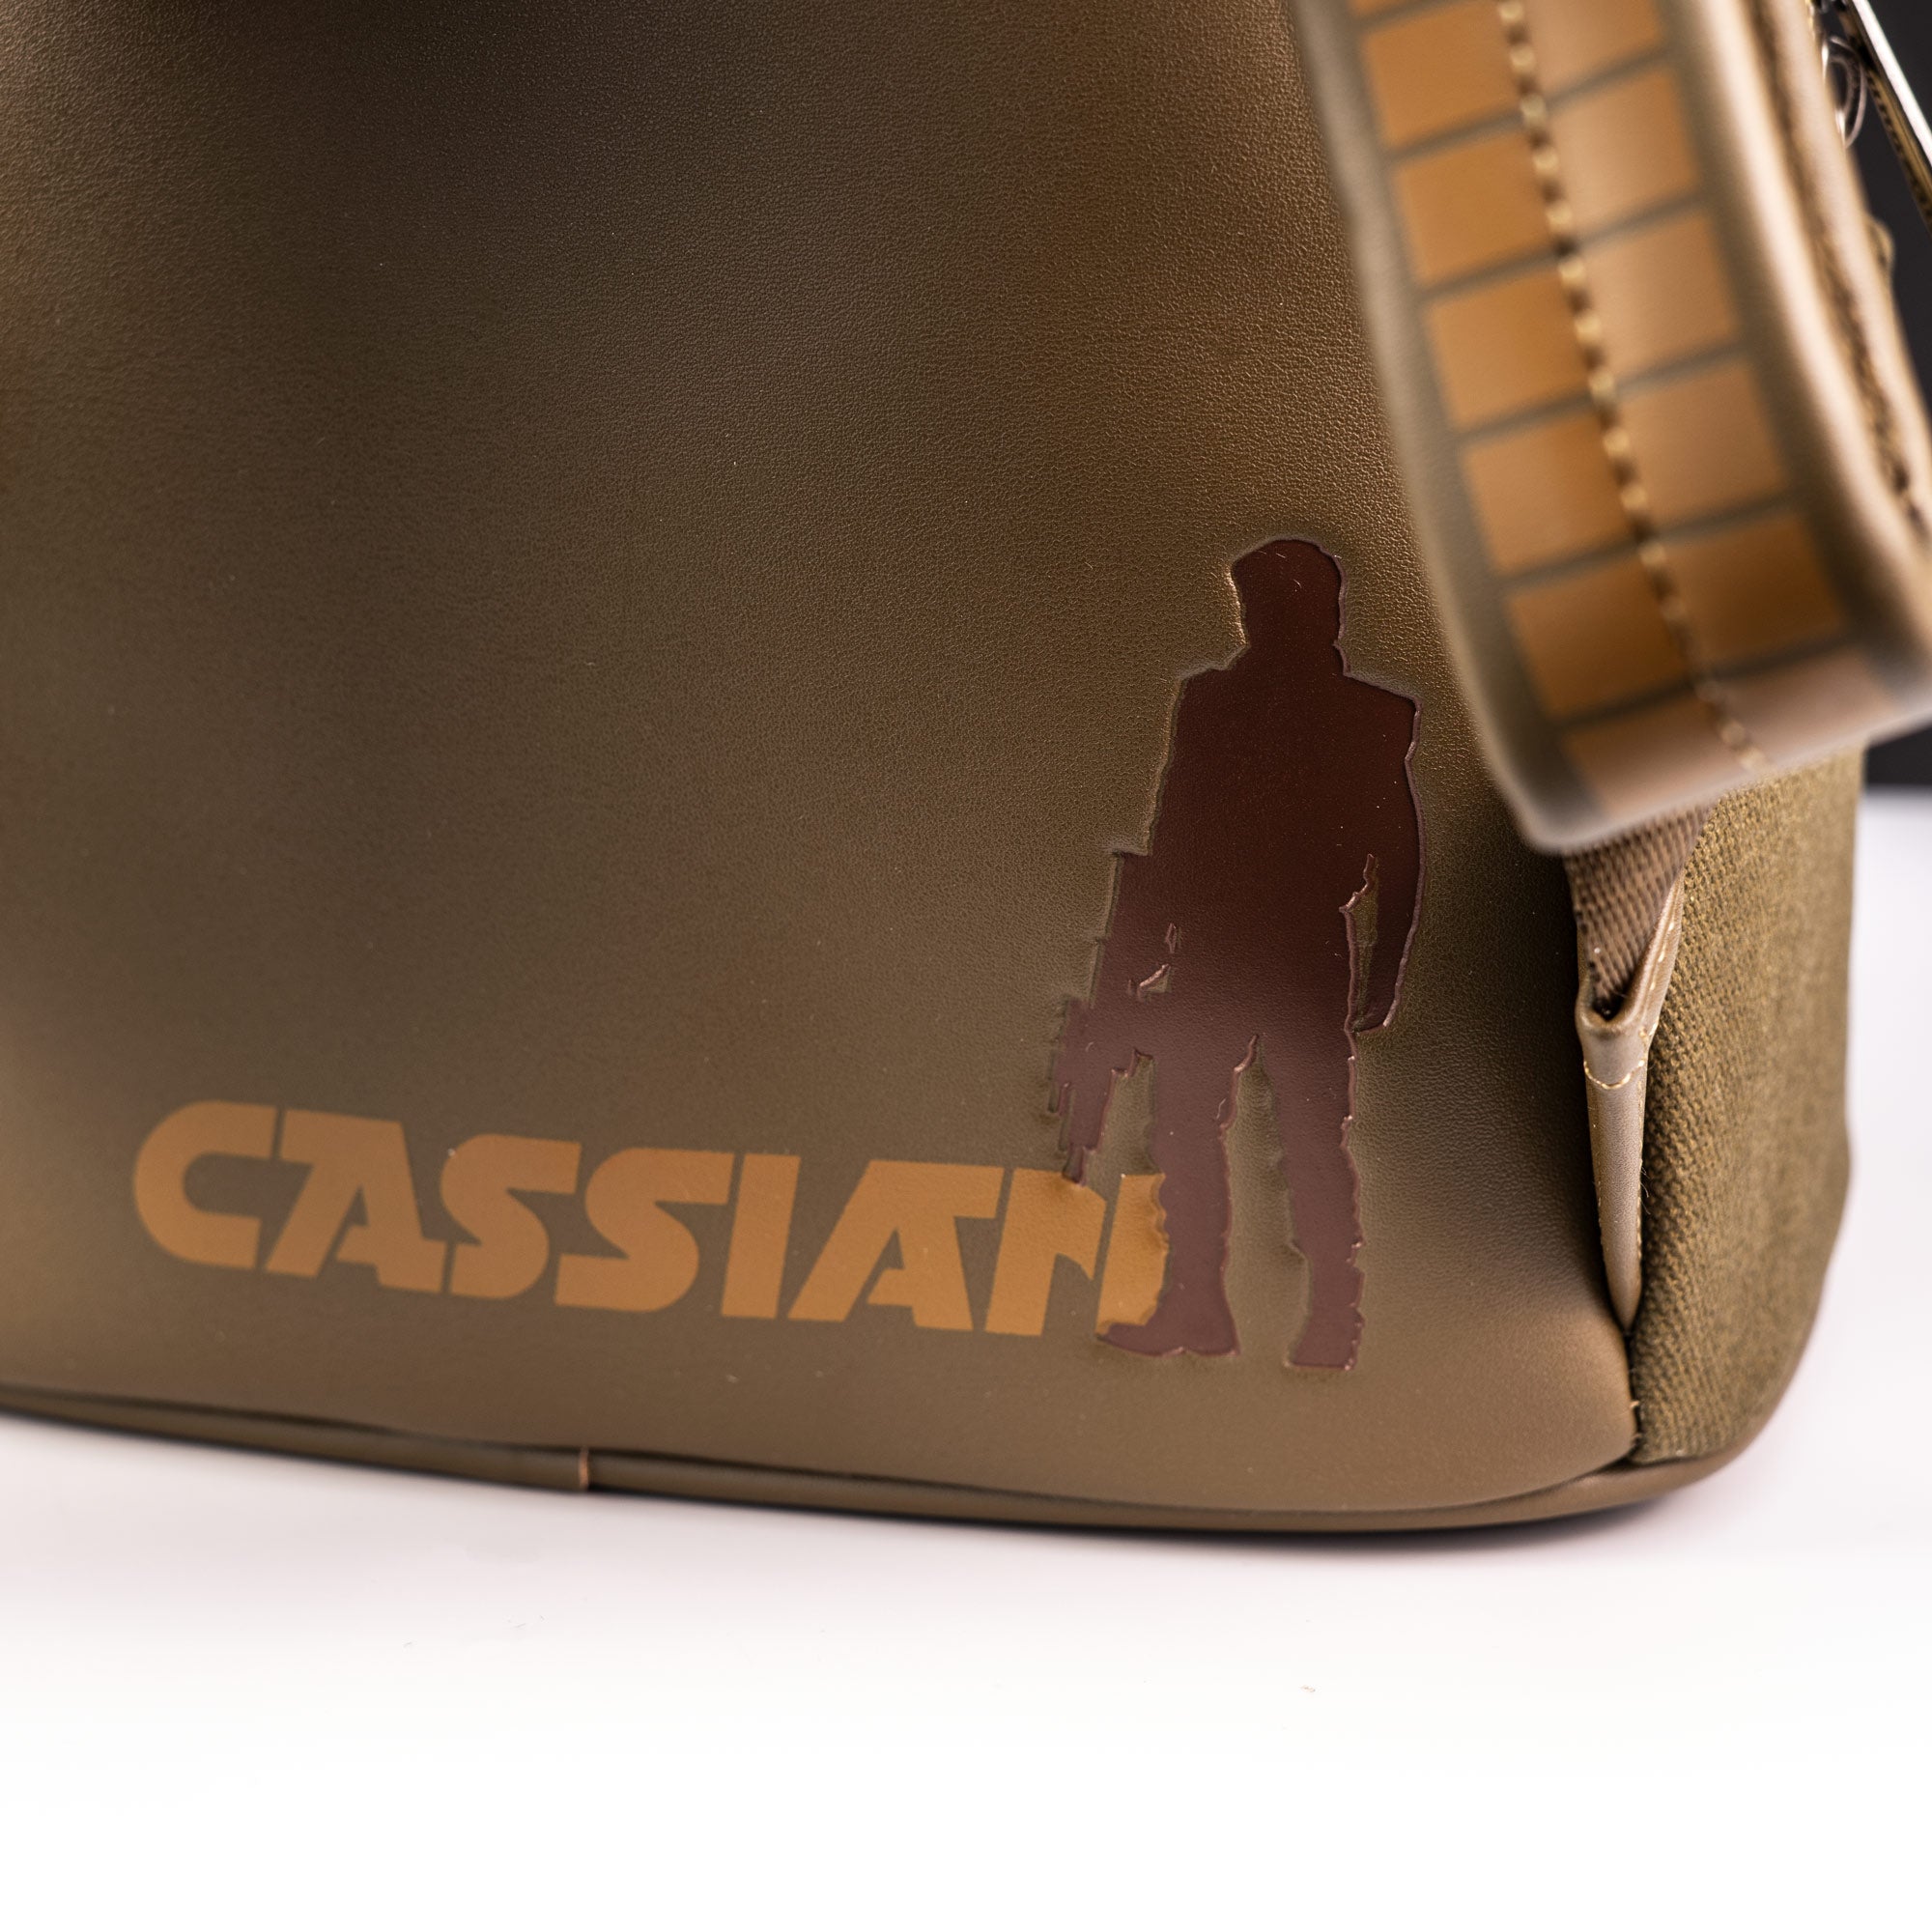 Loungefly x Star Wars Cassian Andor Cosplay Mini Backpack